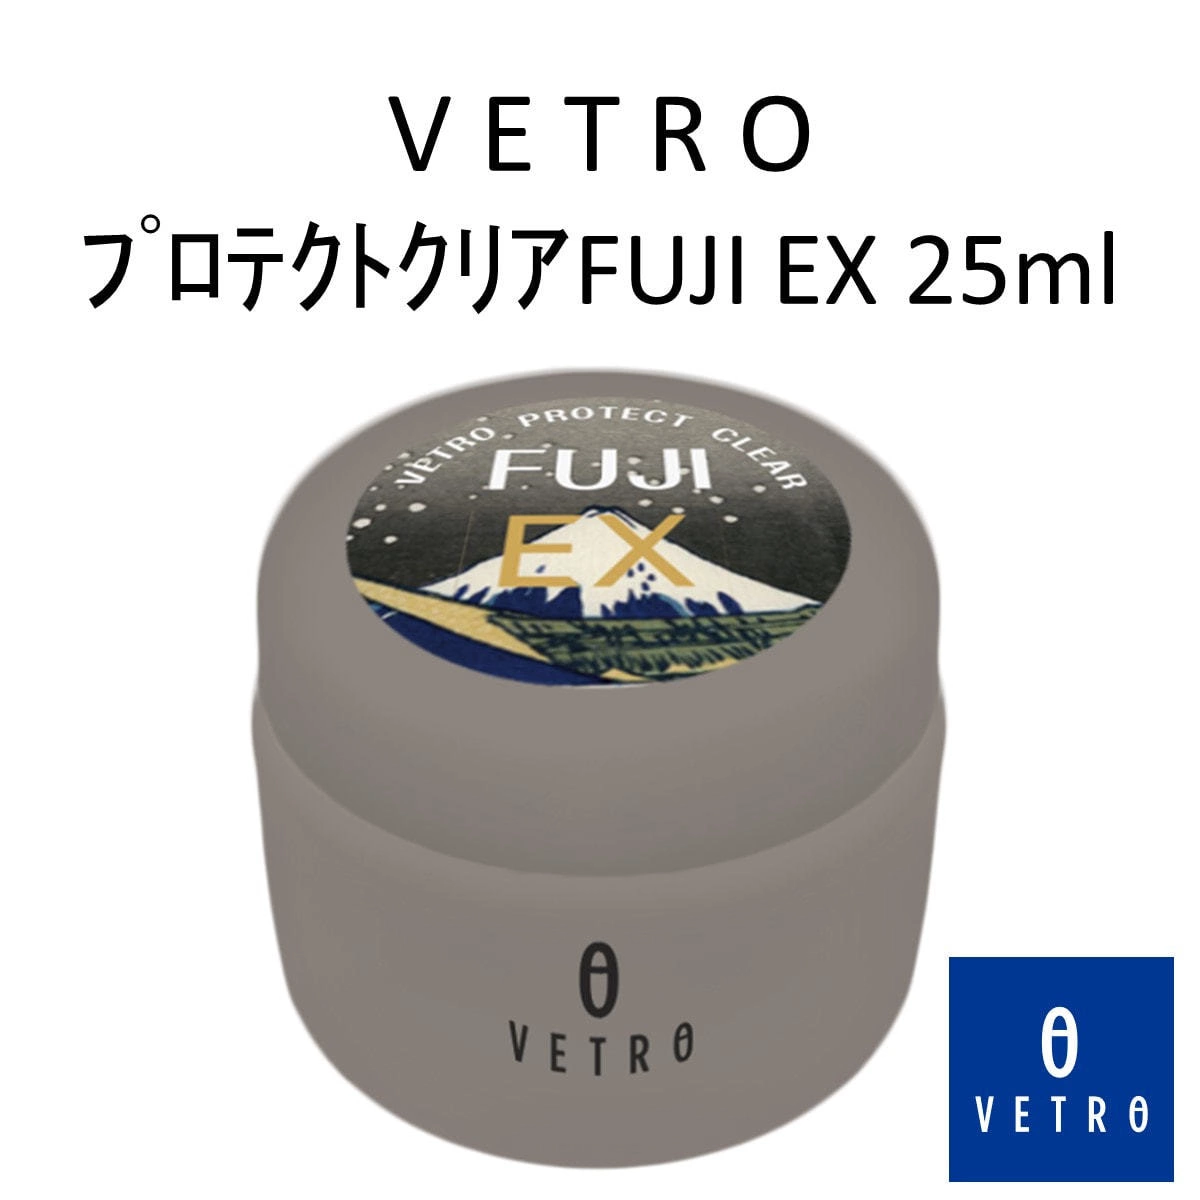 VETRO（べトロ）プロテクトクリア FUJI EX 25ml (VF-25)